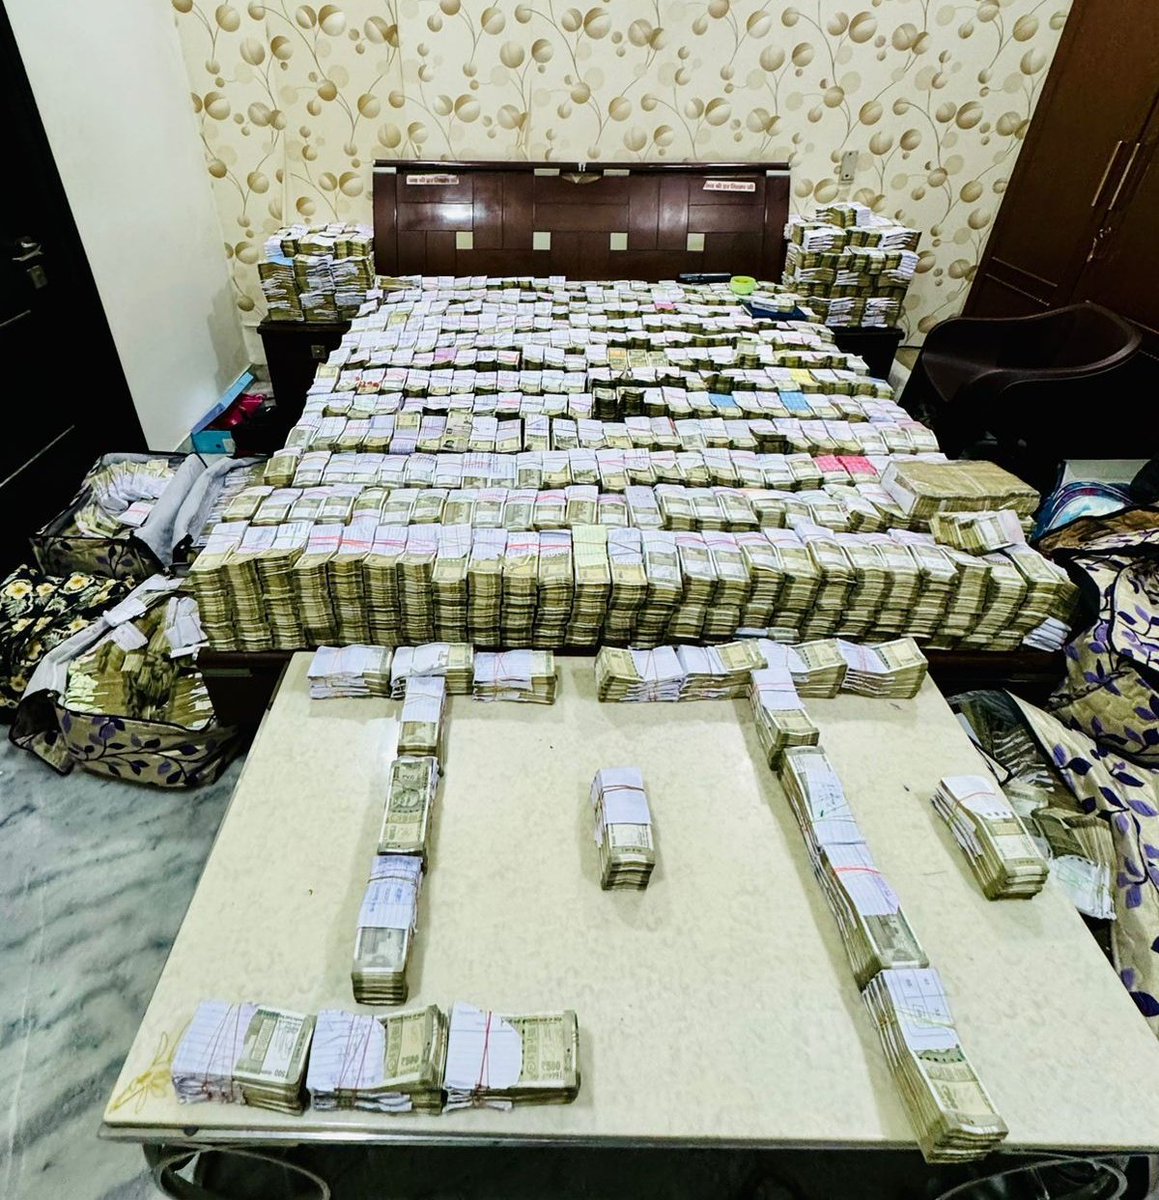 At Ramnath Dang's Agra home, 40 crores in cash and 60 crores in gold were found. How do you know him? A merchant of shoes. Aur tum yahan 'Venture Capitalists' ke peeche 100k ke liye kir ghoom rahe hai.
#Agra #Ramnathdang #Recovered #40crore #Kingsnews7